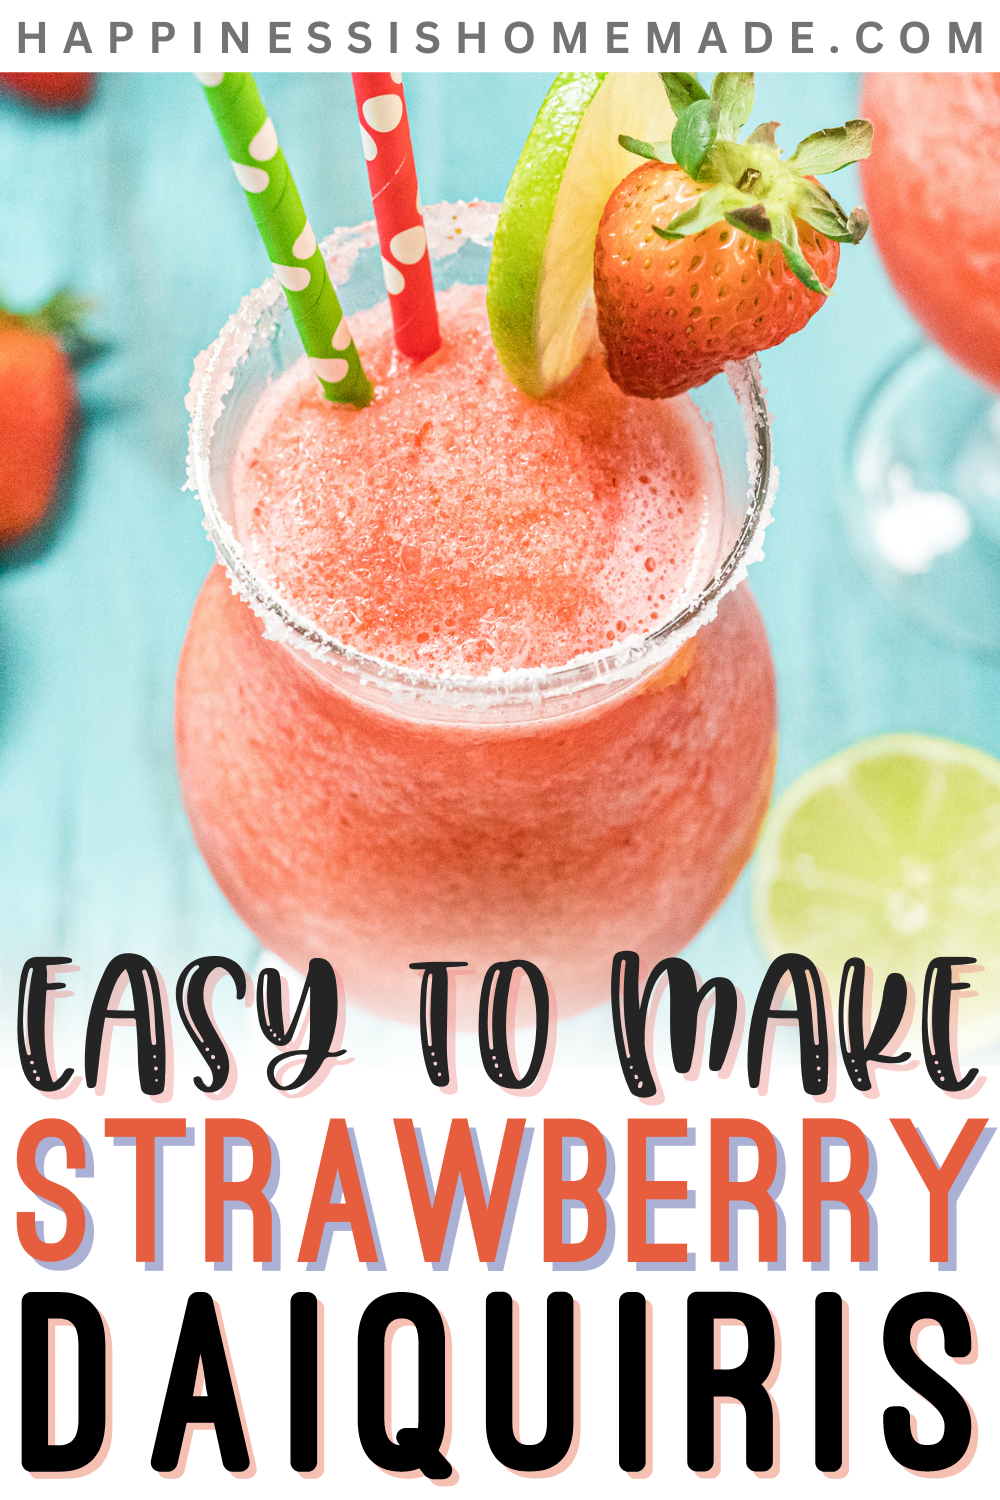 Easy to Make Strawberry Daiquiris